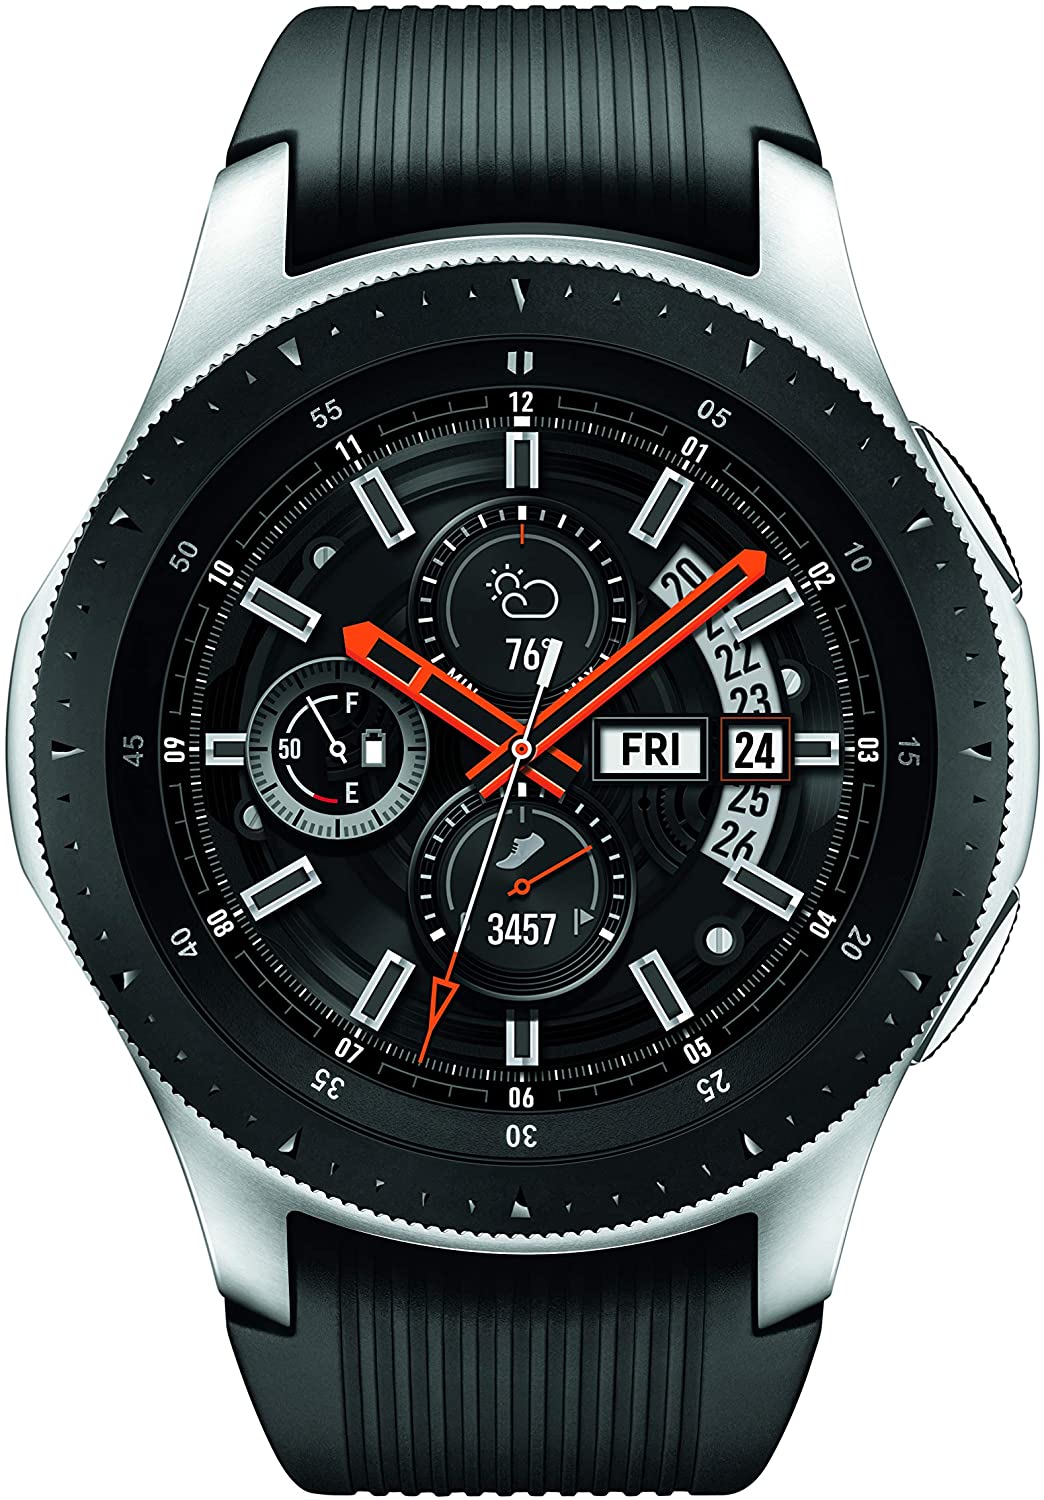 galaxy watch 46mm spesifikasi